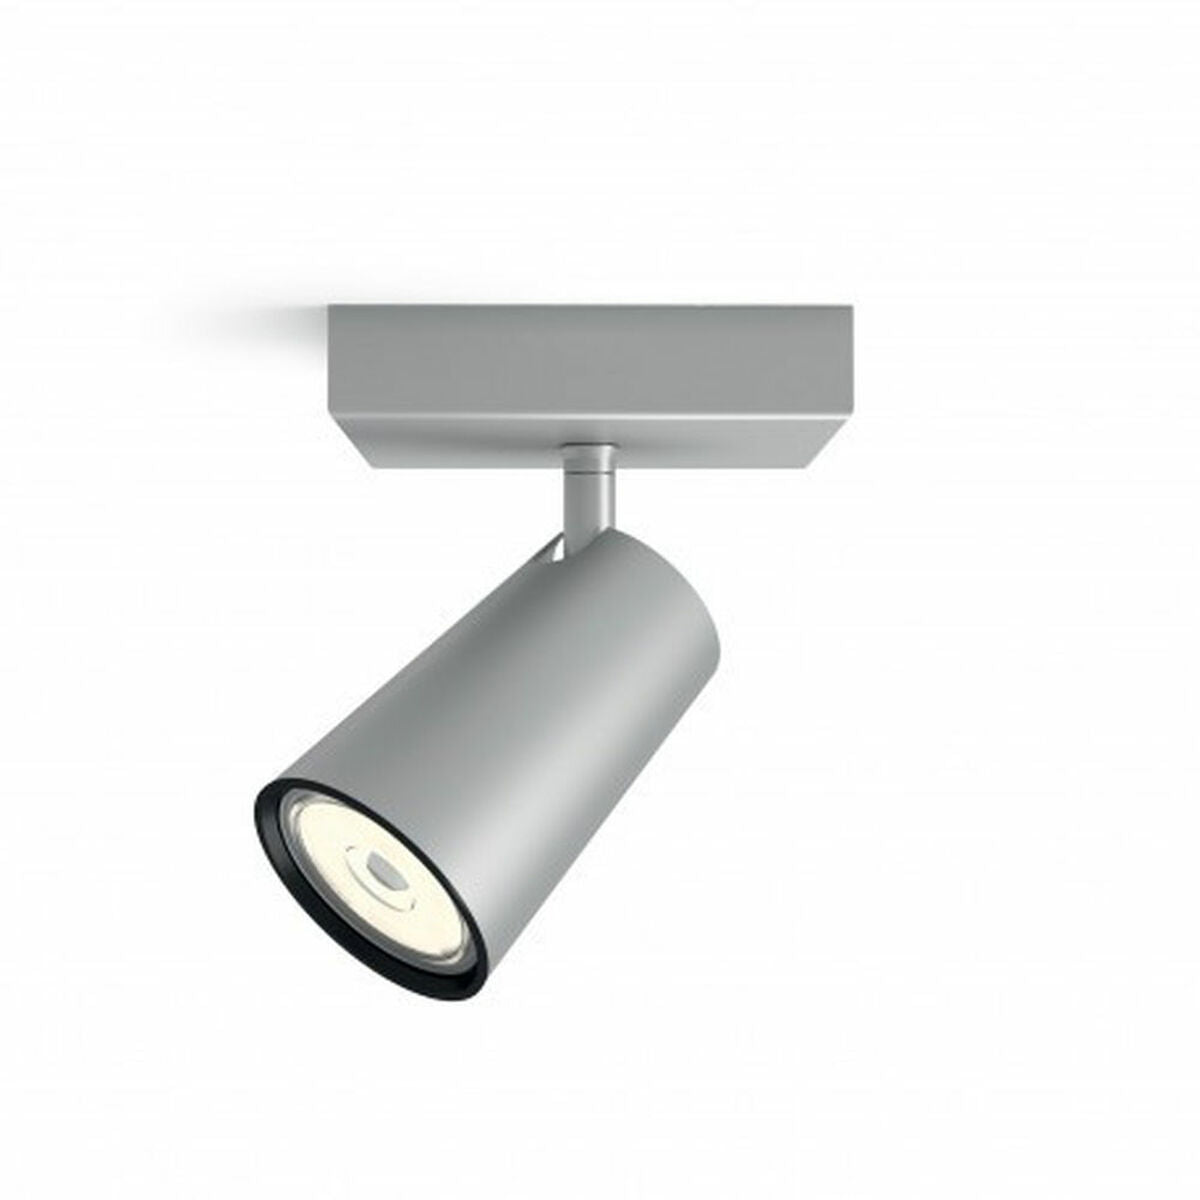 LED spotlight Philips Foco Zilverkleurig Aluminium 10 W 10,2 x 10,2 x 9,2 cm